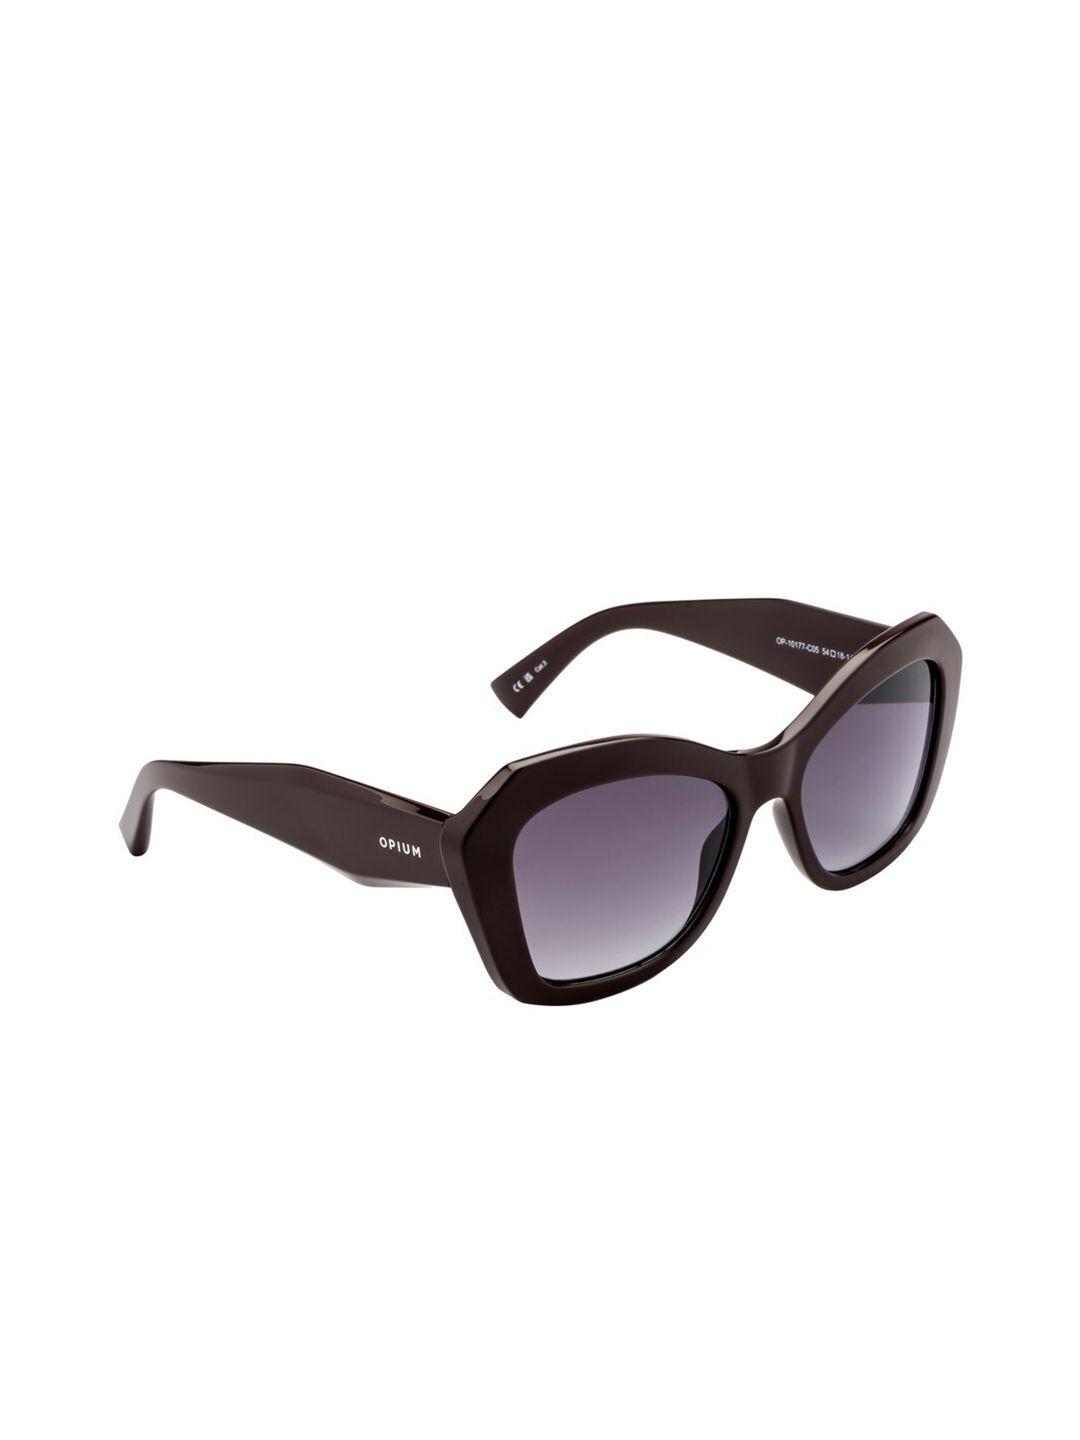 opium women cateye sunglasses with uv protected lens op-10177-c05-54